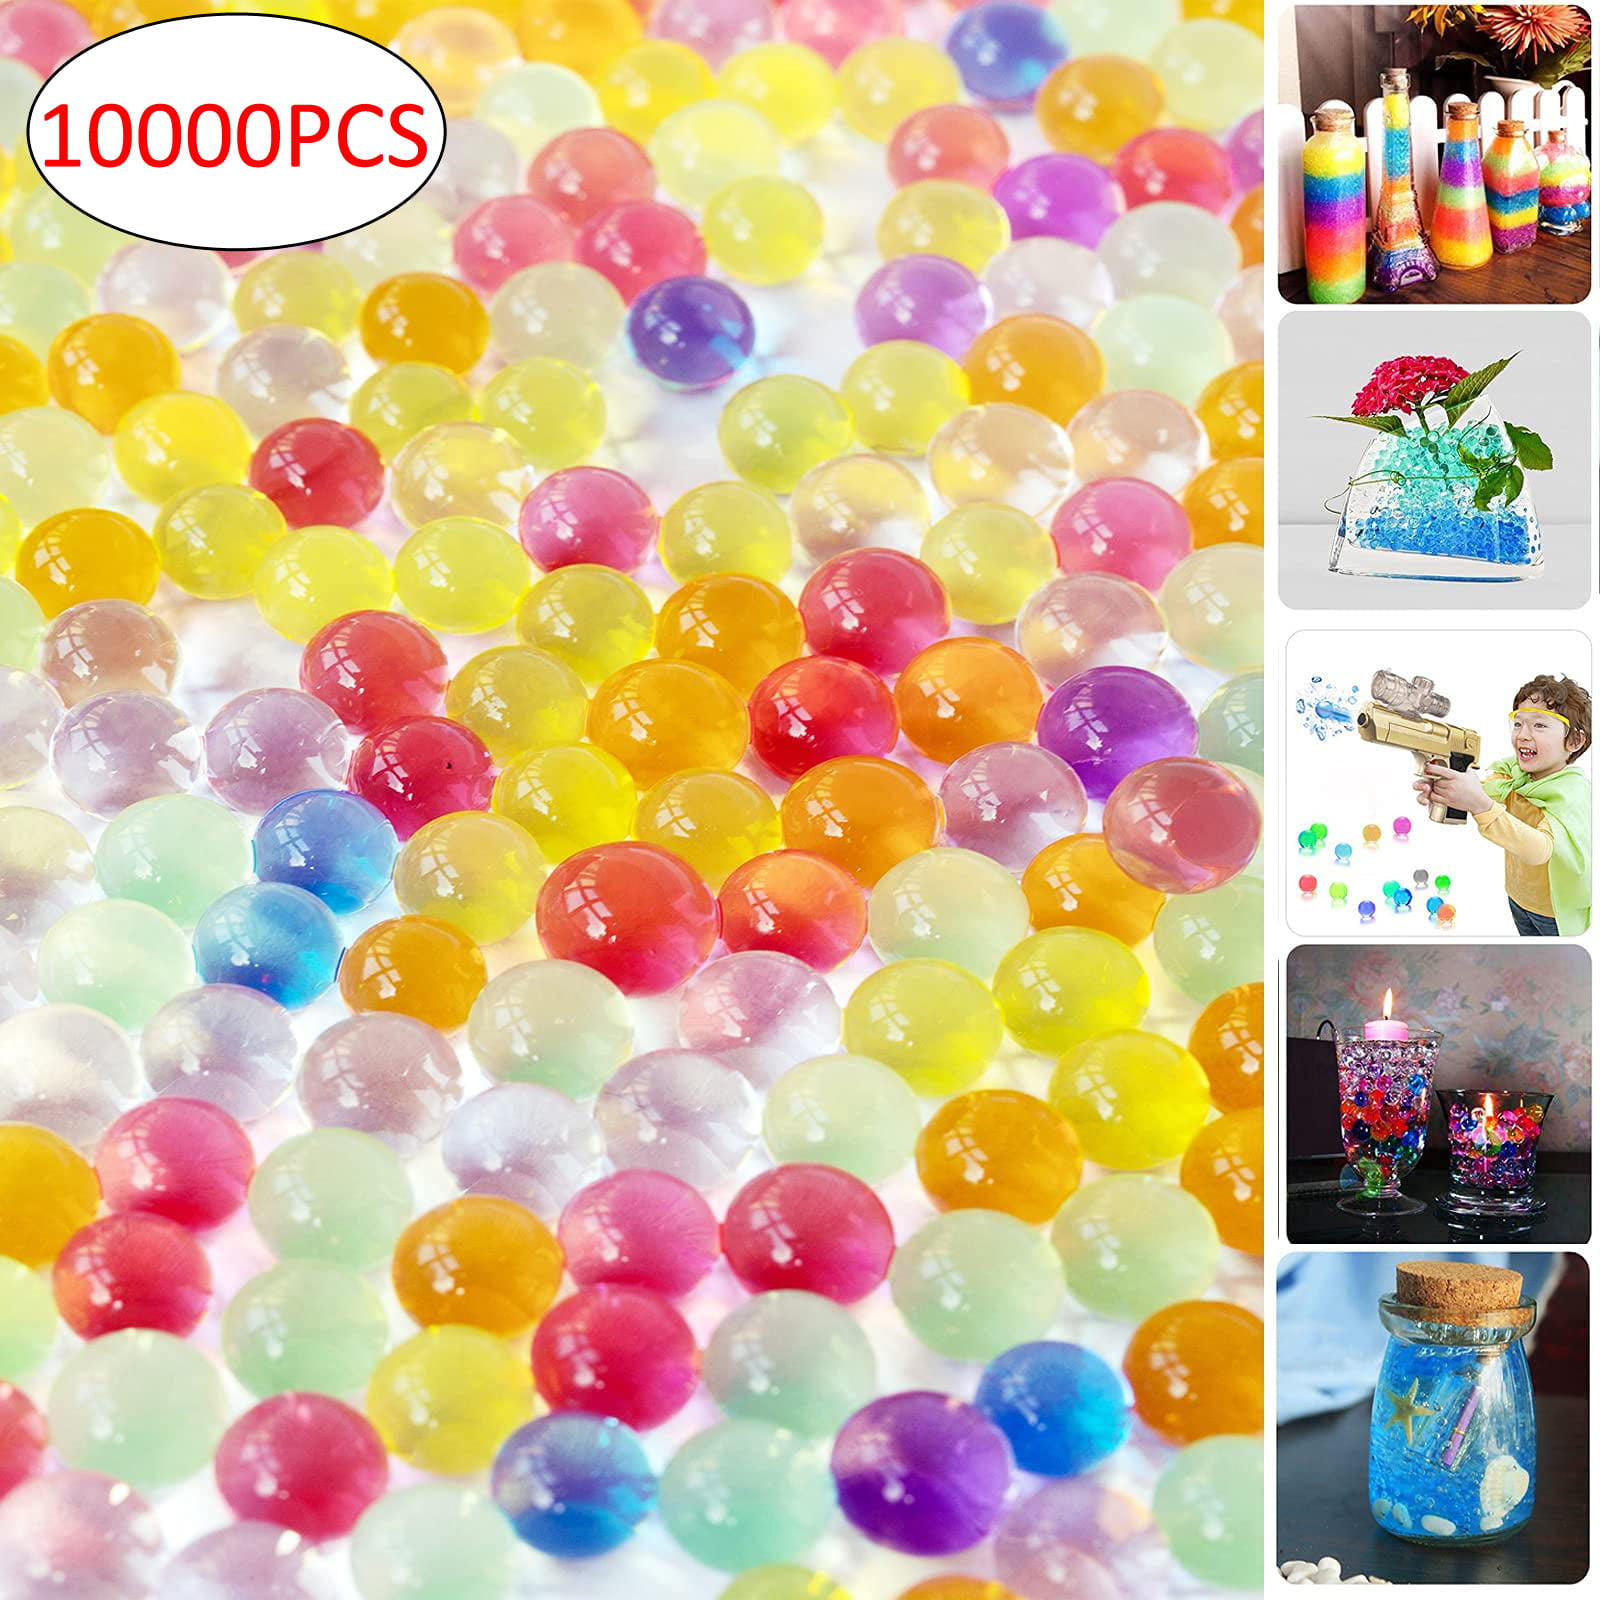 10,000 Pearl Shaped Crystal Soil Water Beads Mud Grow Magic Balls Wedding Decor 